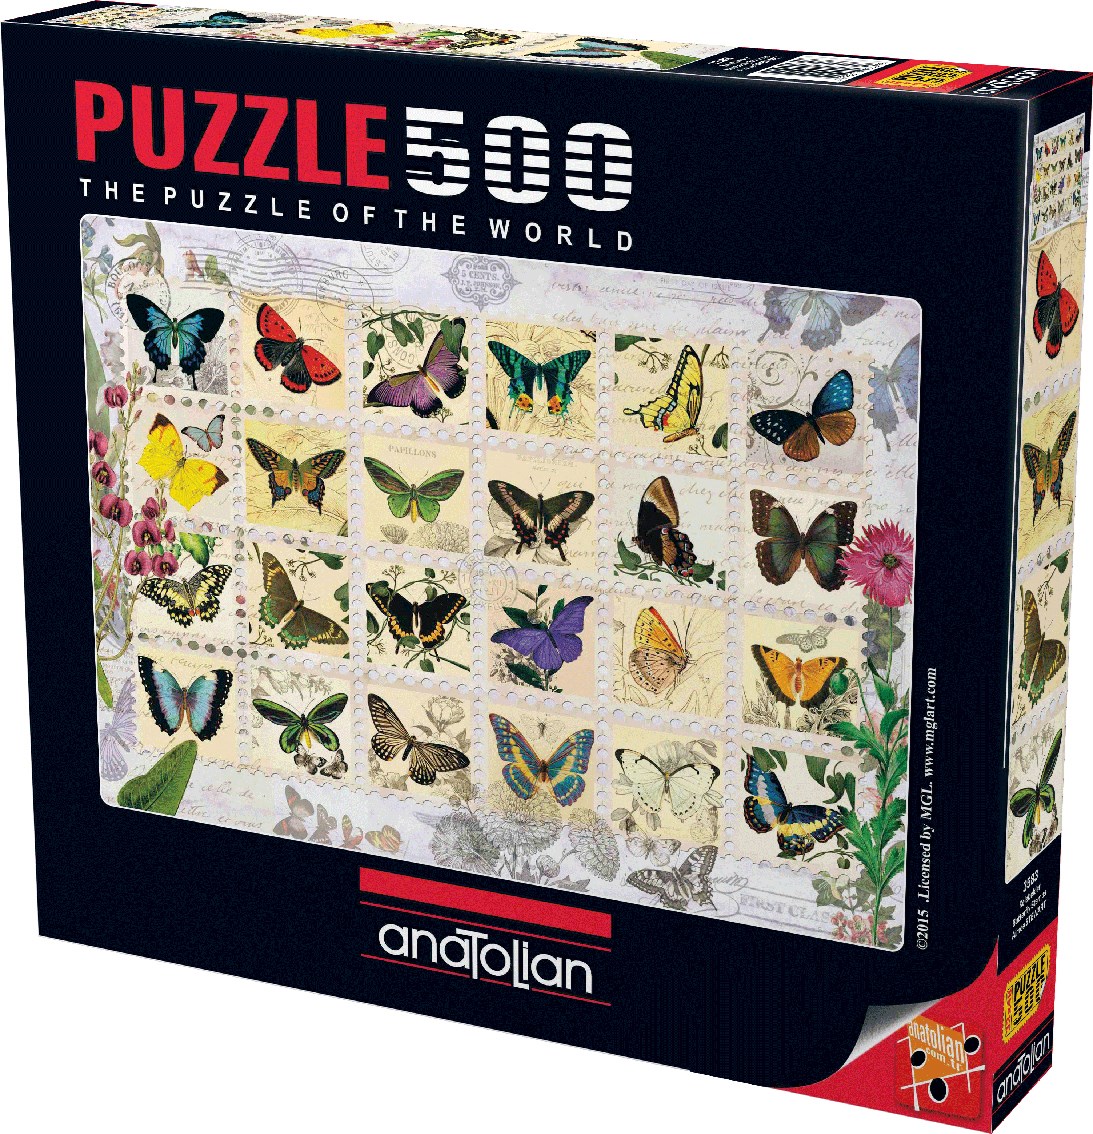 Ravensburger 15261 Butterfly Splendours 1000pc Jigsaw Puzzle for sale online